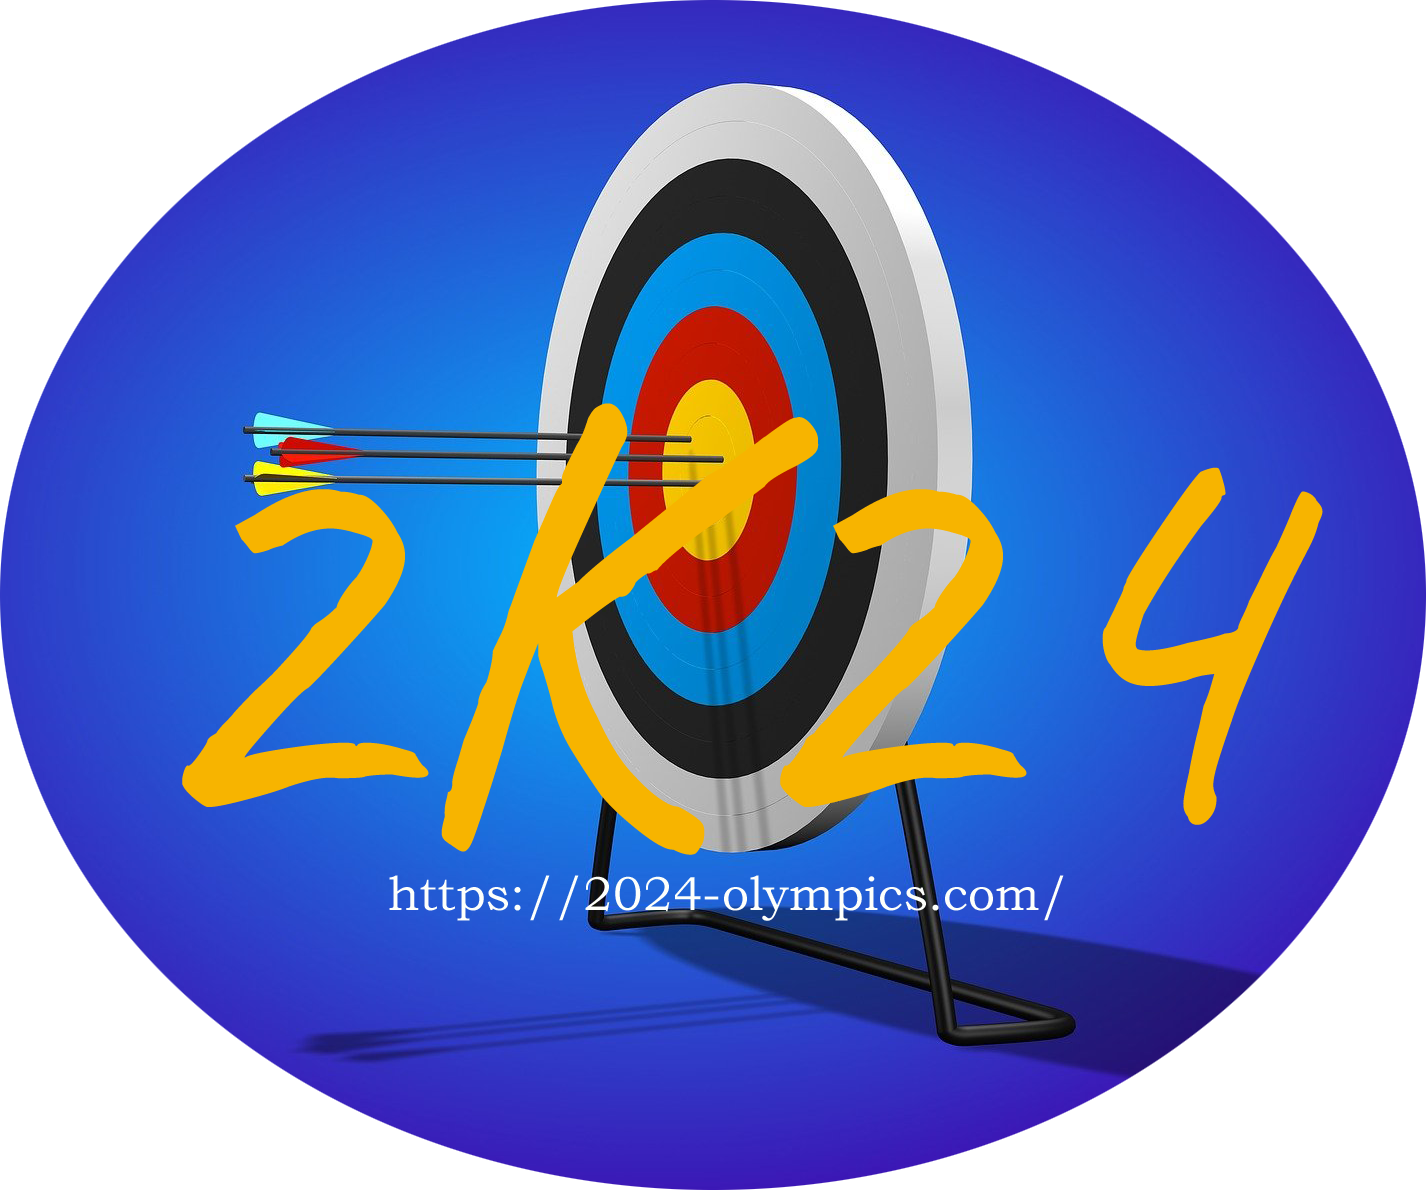 2k24 Logo 